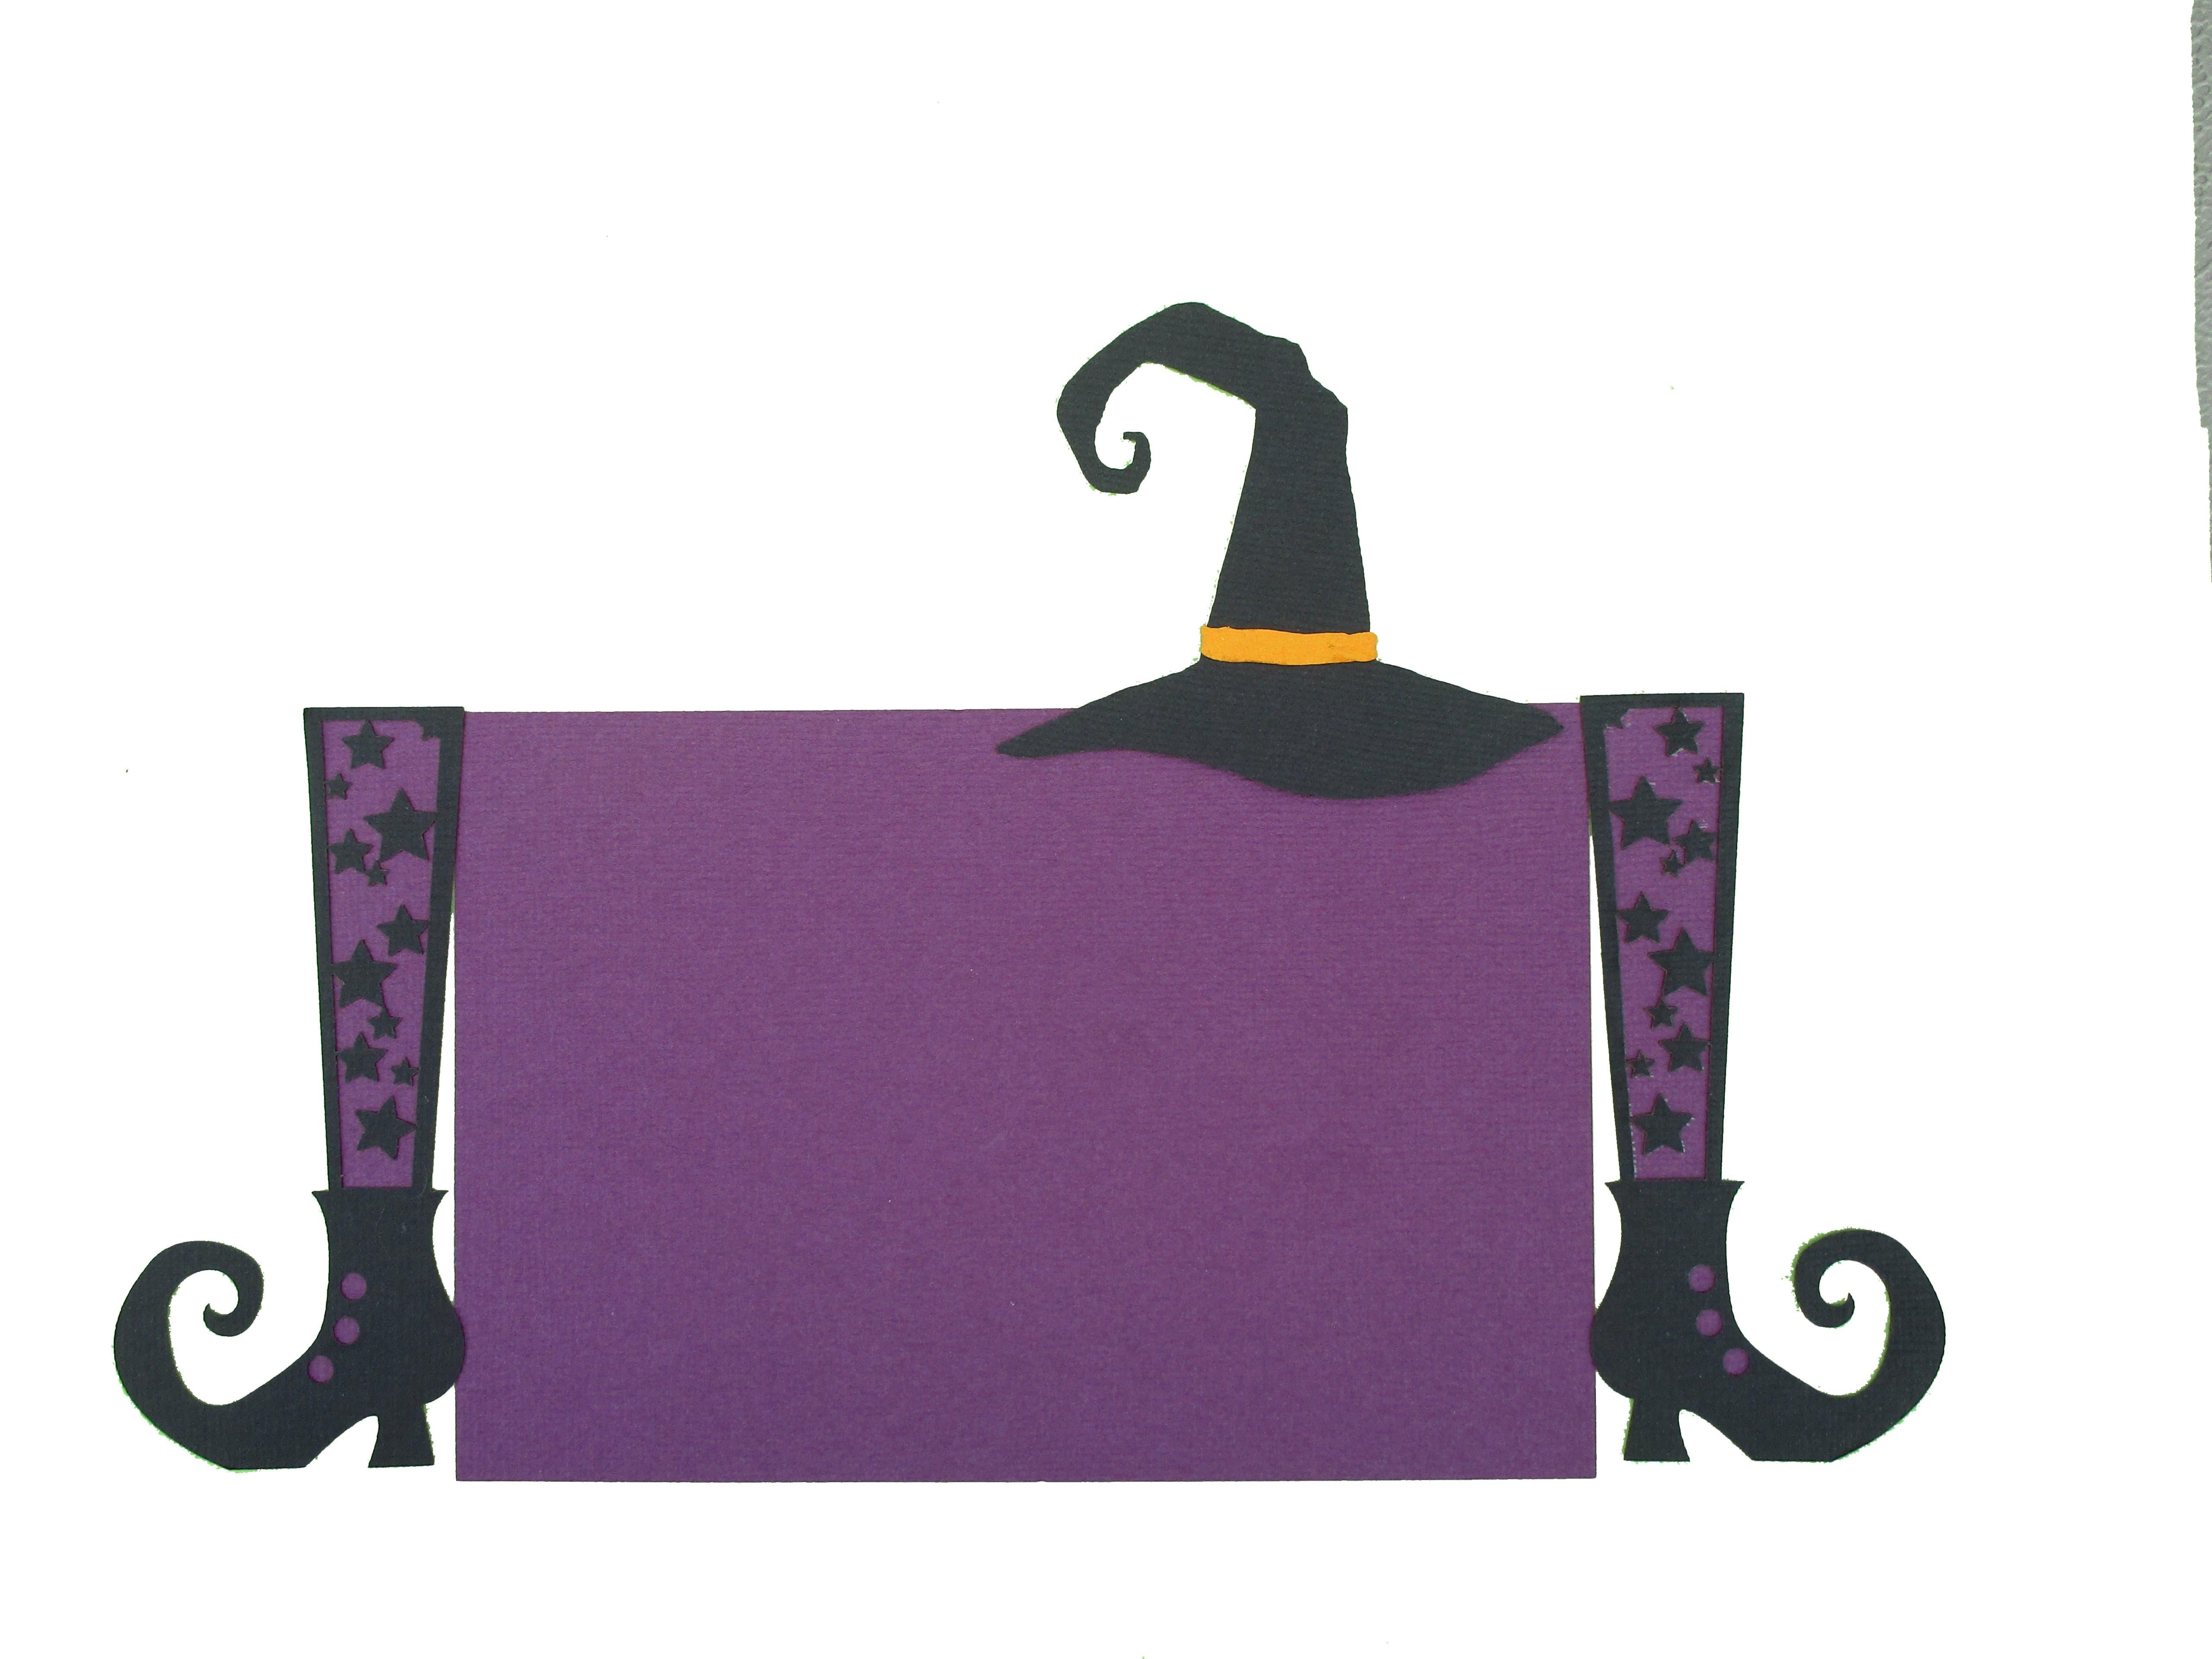 Halloween Purple Stars Witch Legs & Hat 4.25 x 6.25 Laser Cut Photo Mat Frame Scrapbook Embellishment by SSC Laser Designs